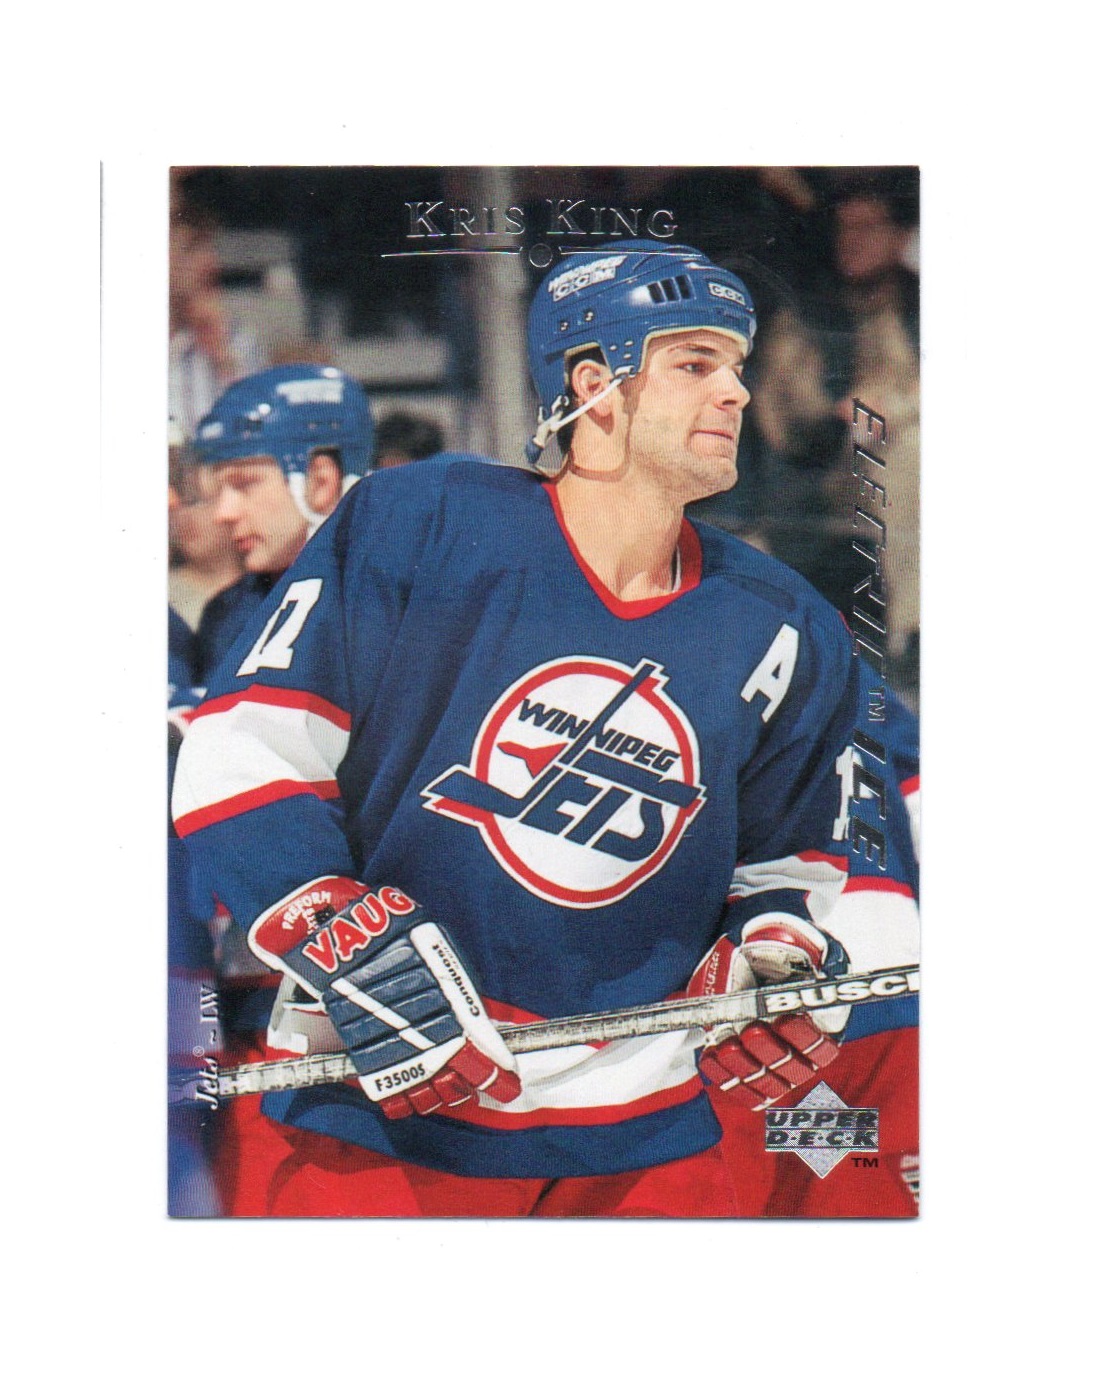 1995-96 Upper Deck Electric Ice #141 Kris King (12-X248-NHLJETS)